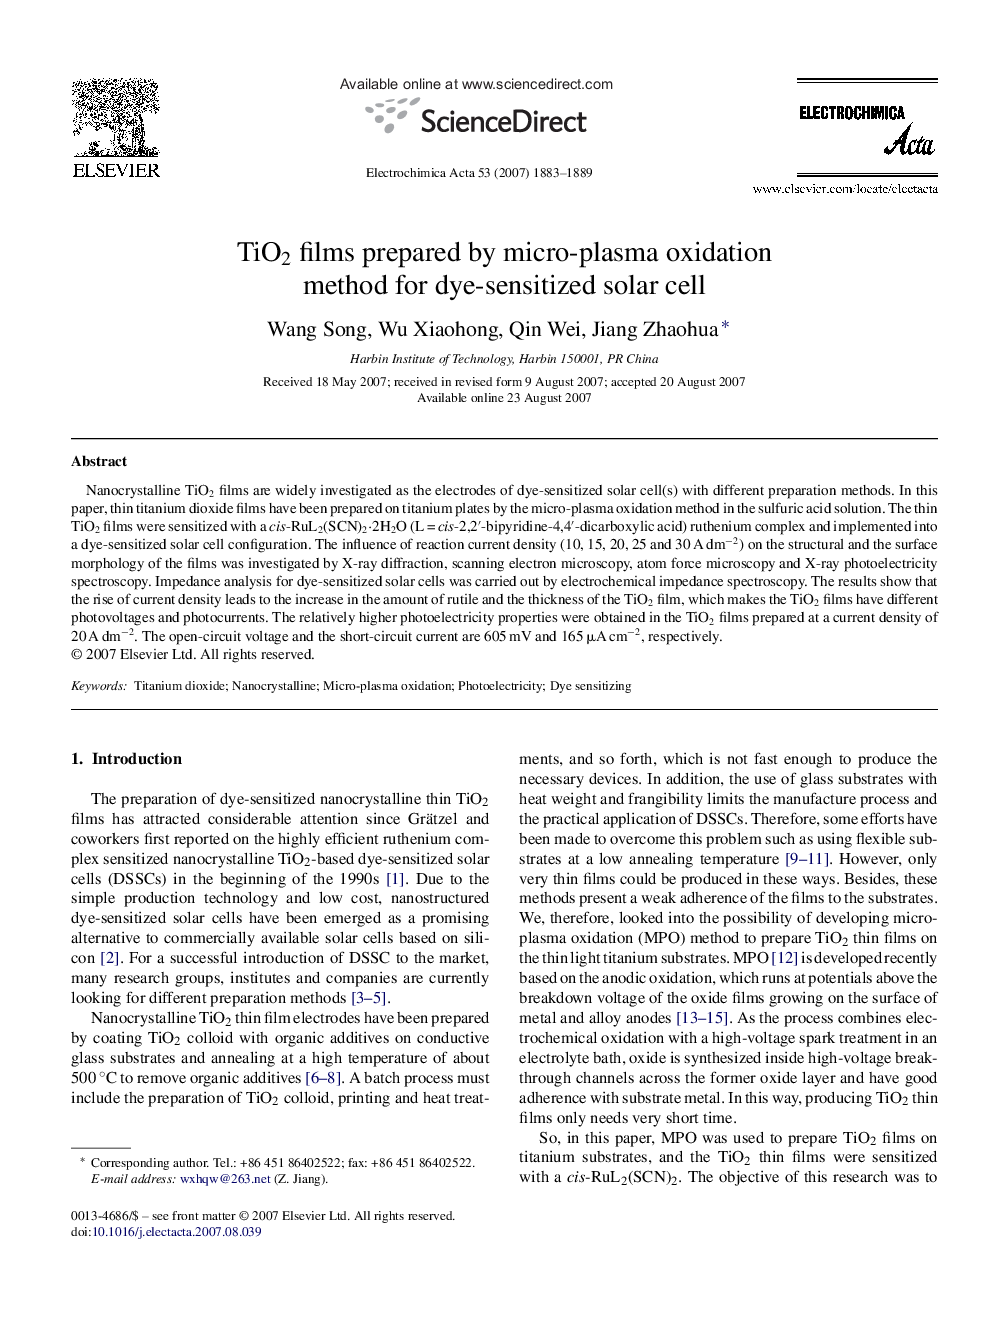 TiO2 films prepared by micro-plasma oxidation method for dye-sensitized solar cell